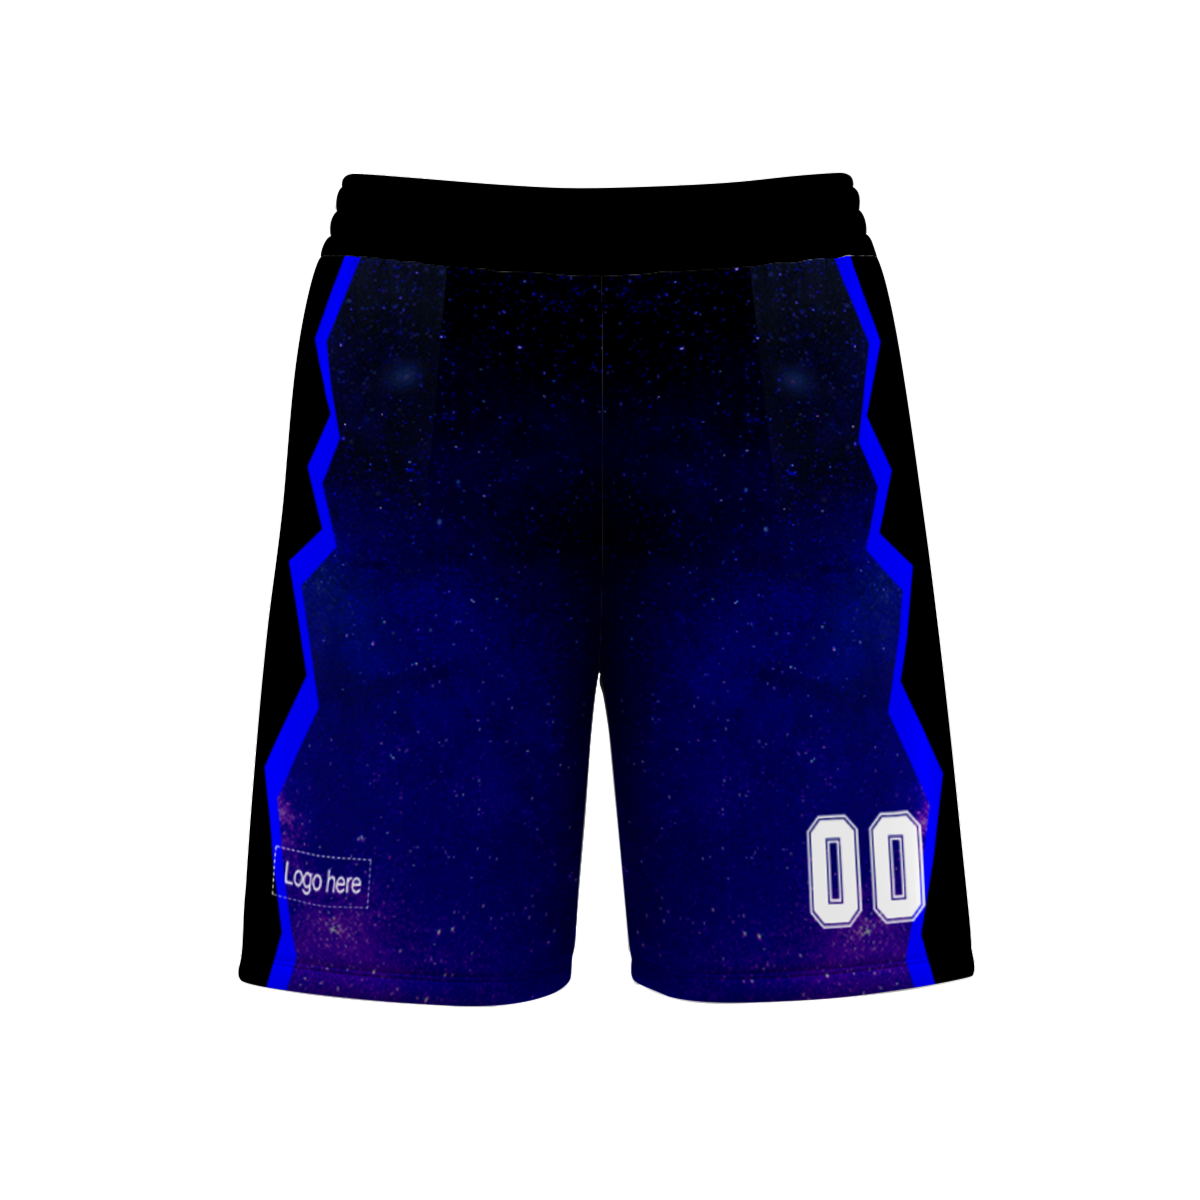 personalized-design-customized-basketball-jersey-wholesale-blank-sublimation-basketball-wear-suit-print-on-demand-uniform-cloth-set-at-cj-pod-7